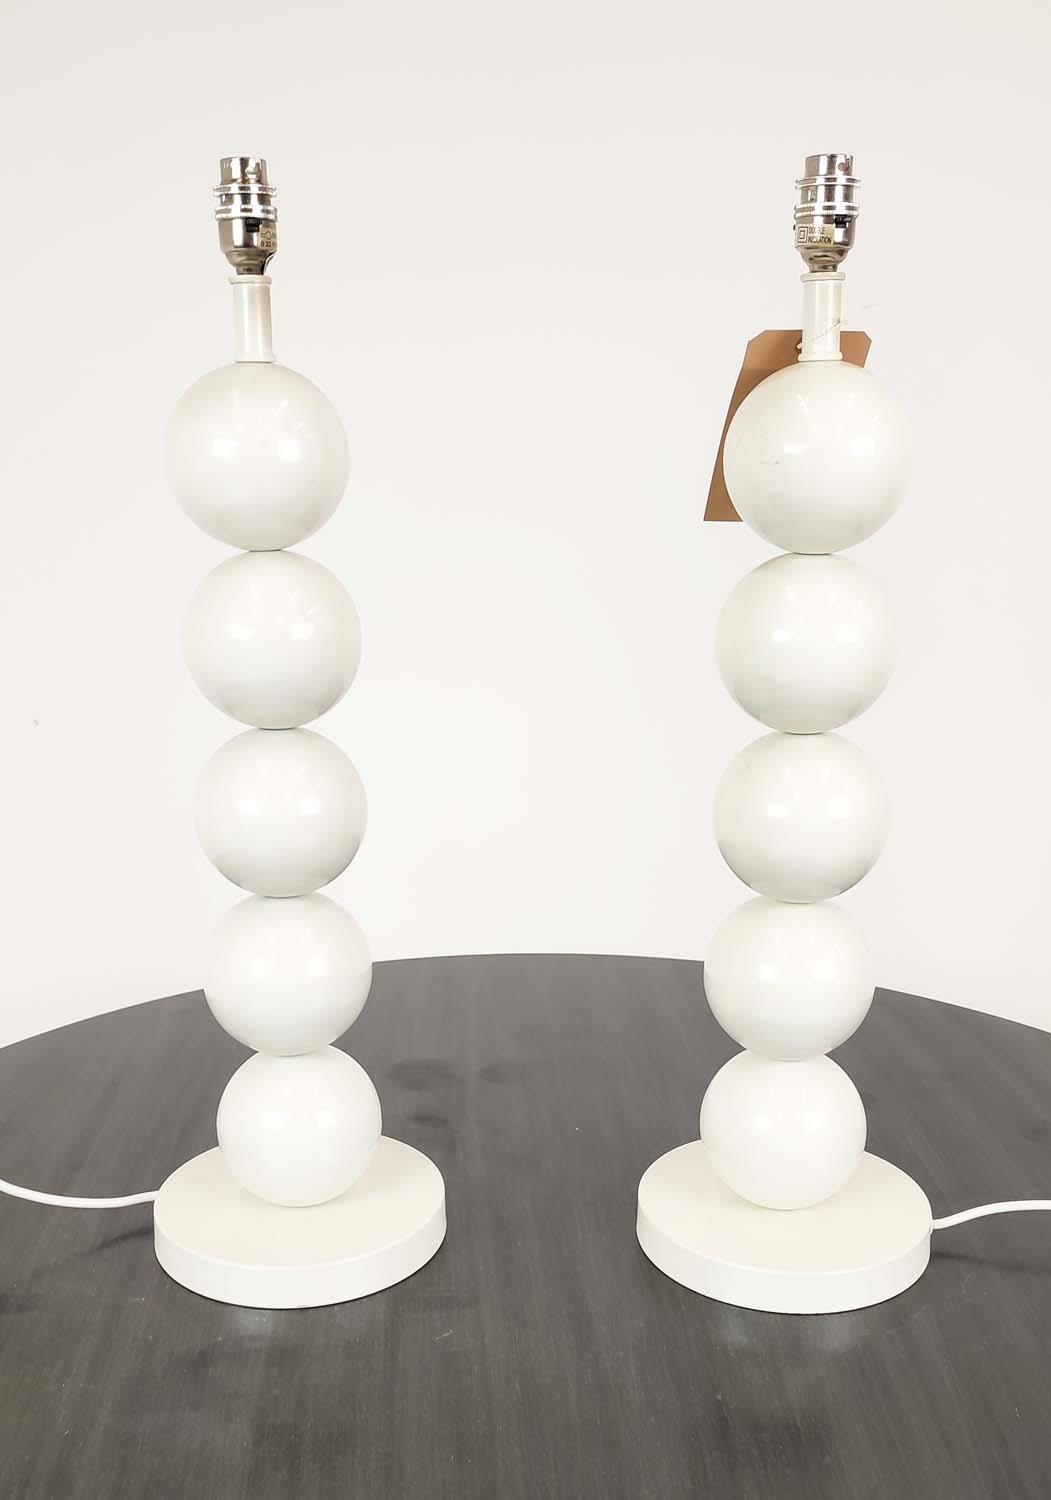 COACH HOUSE TABLE LAMPS, a pair, white metal ball stems, 62cm H. (2)